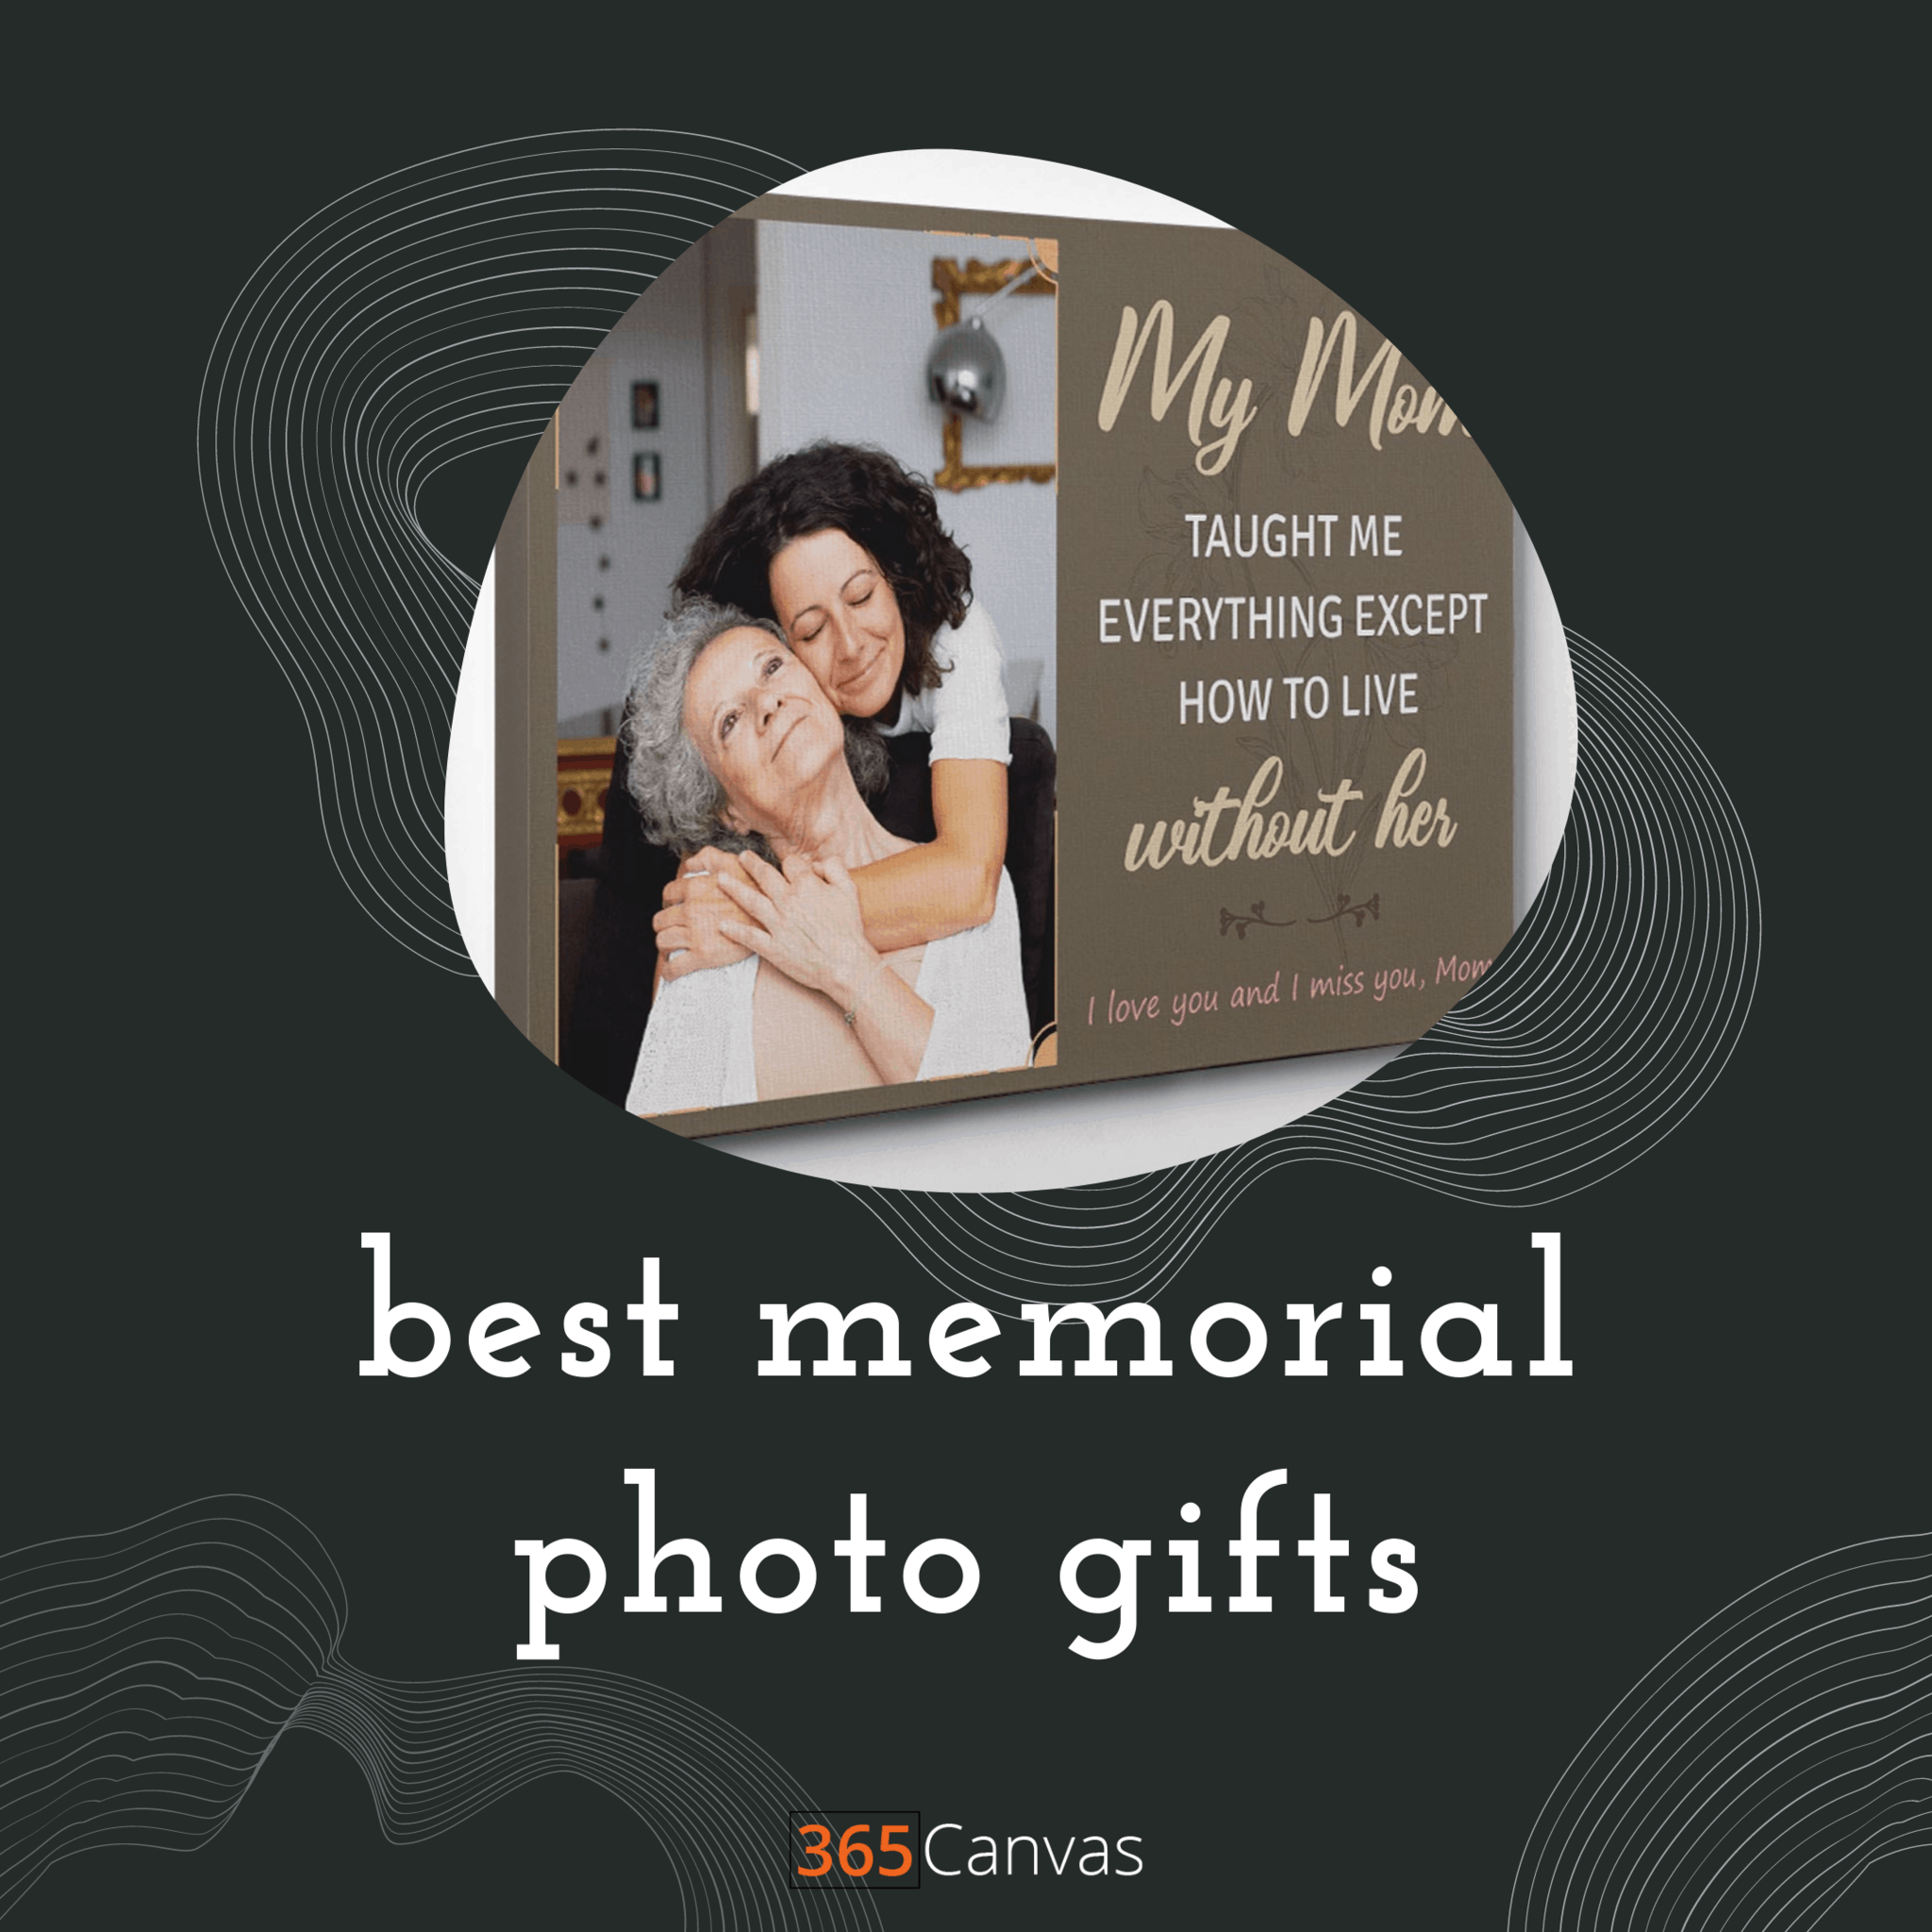 Best Memorial Photo Gifts